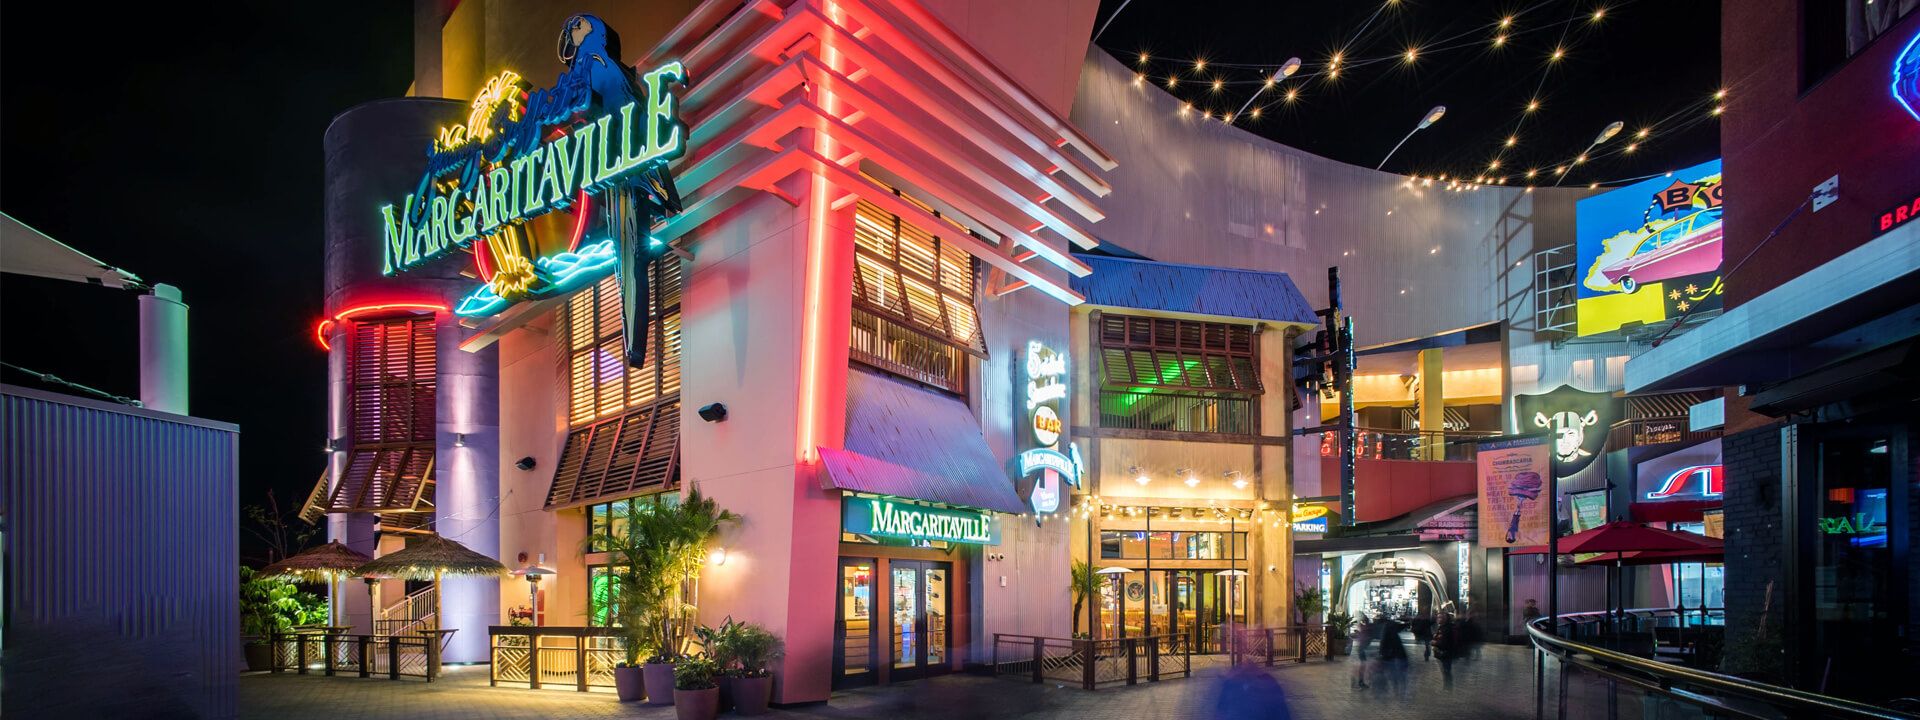 Margaritaville Hollywood Restaurant, Hollywood, CA